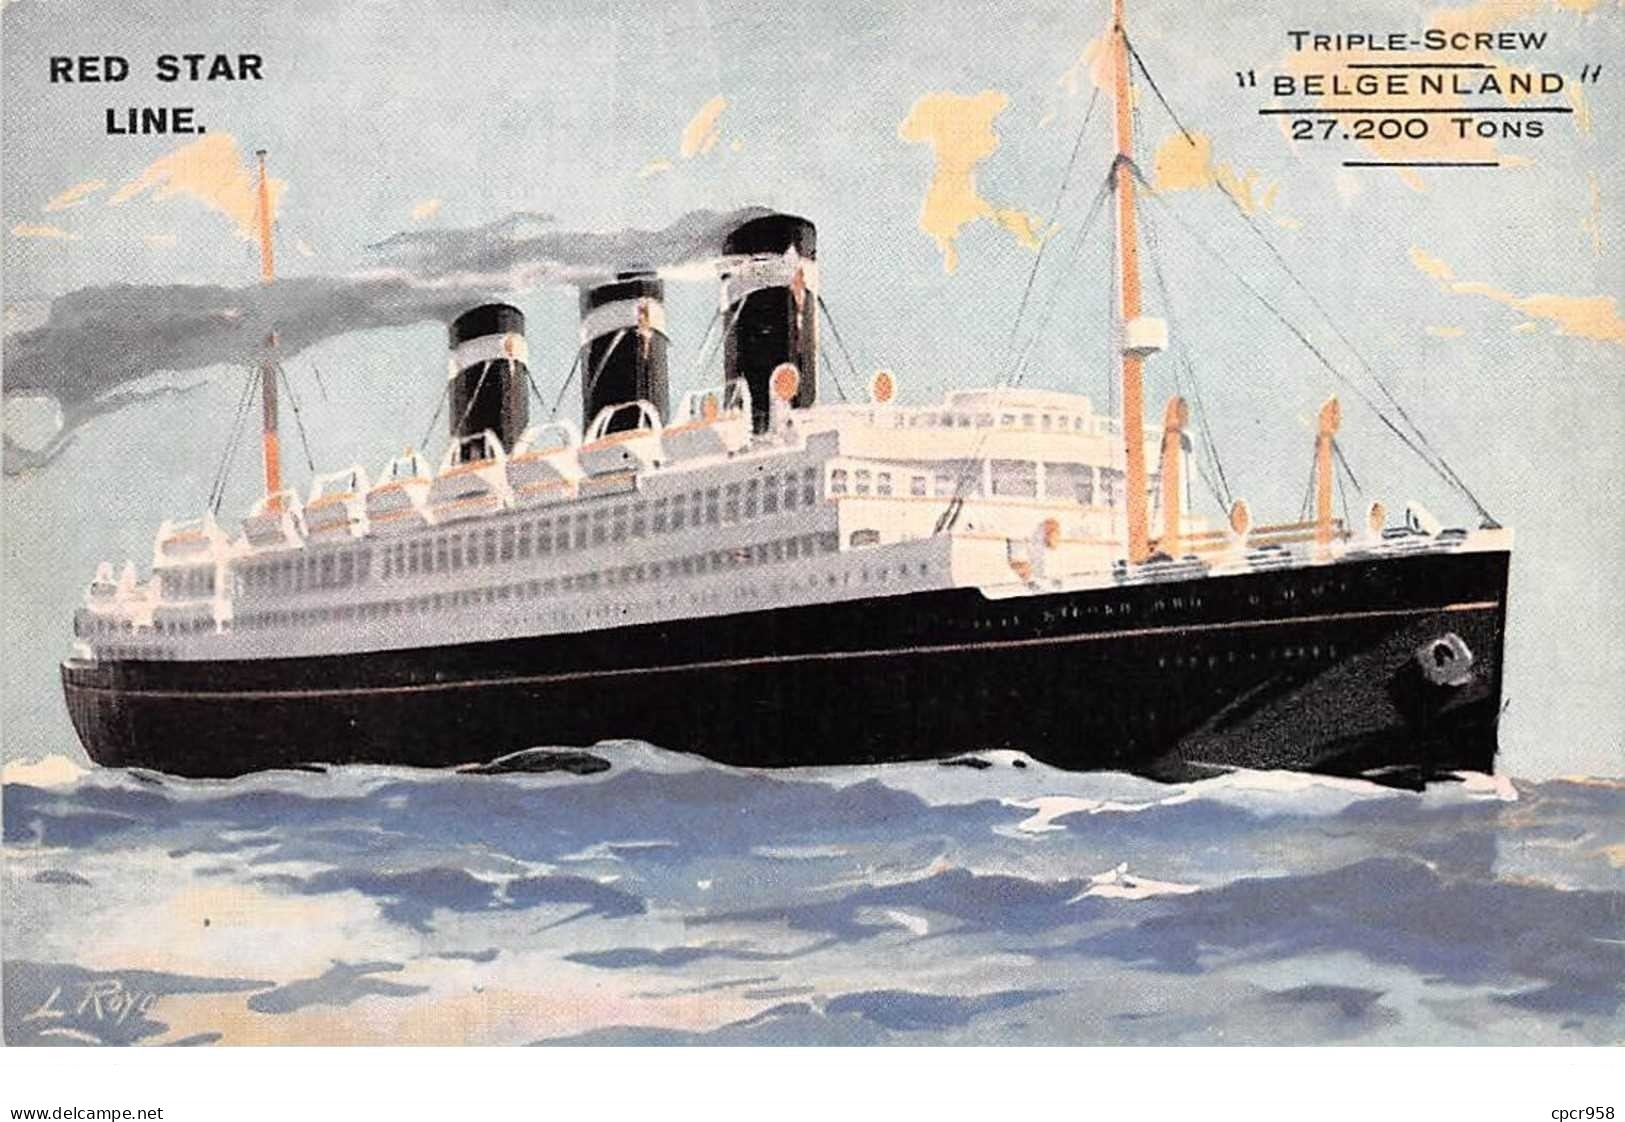 Bateaux - N°60466 - Red Star Line - Triple-Screw Belgengland 27.200 Tons - Famille Titanic Paquebot - Paquebots